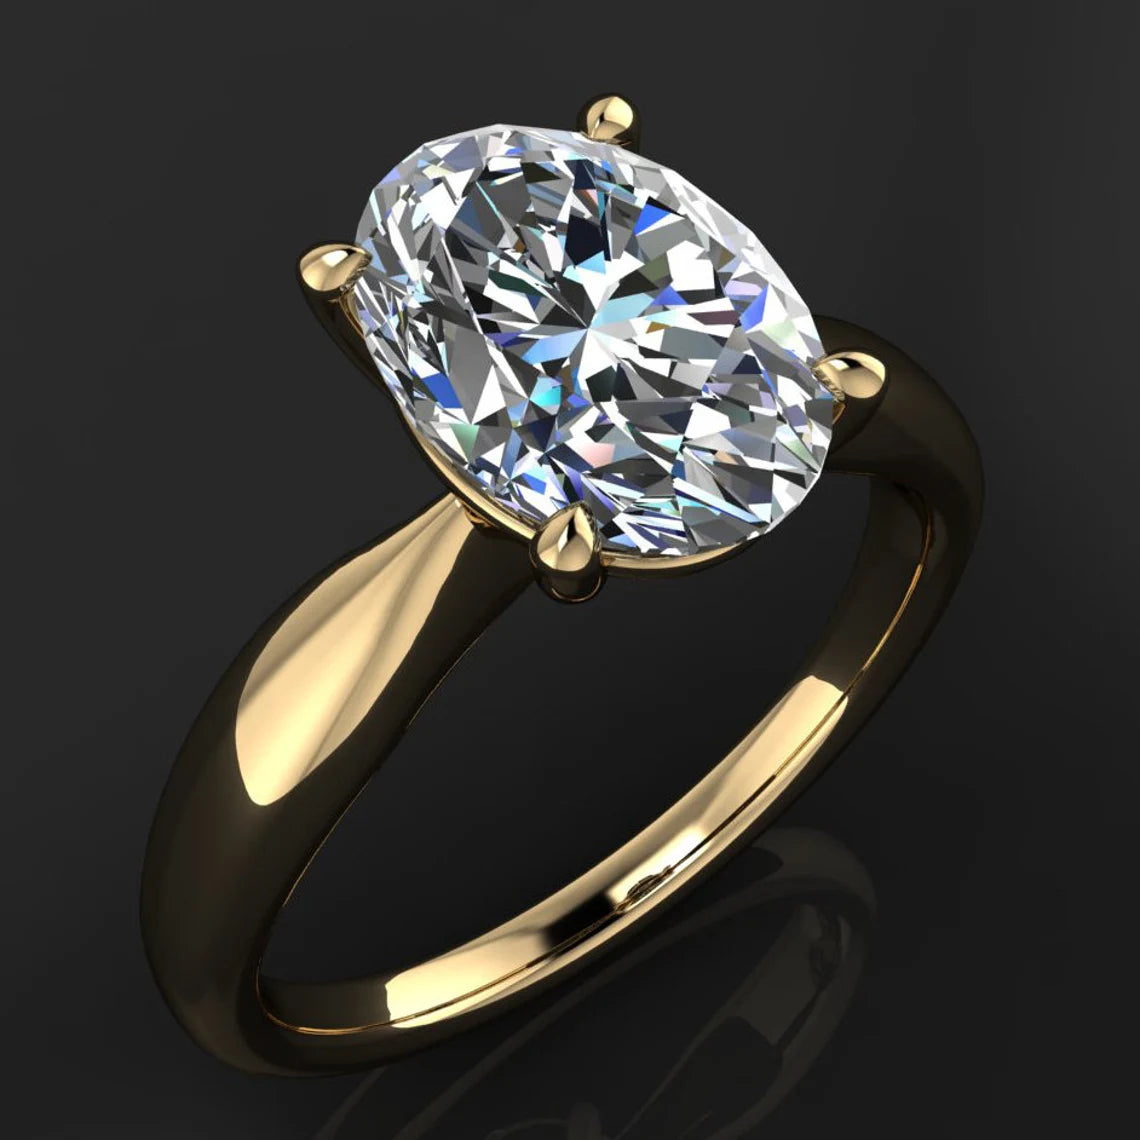 quinn ring - 2 carat antique oval moissanite engagement ring, oval moissanite - J Hollywood Designs